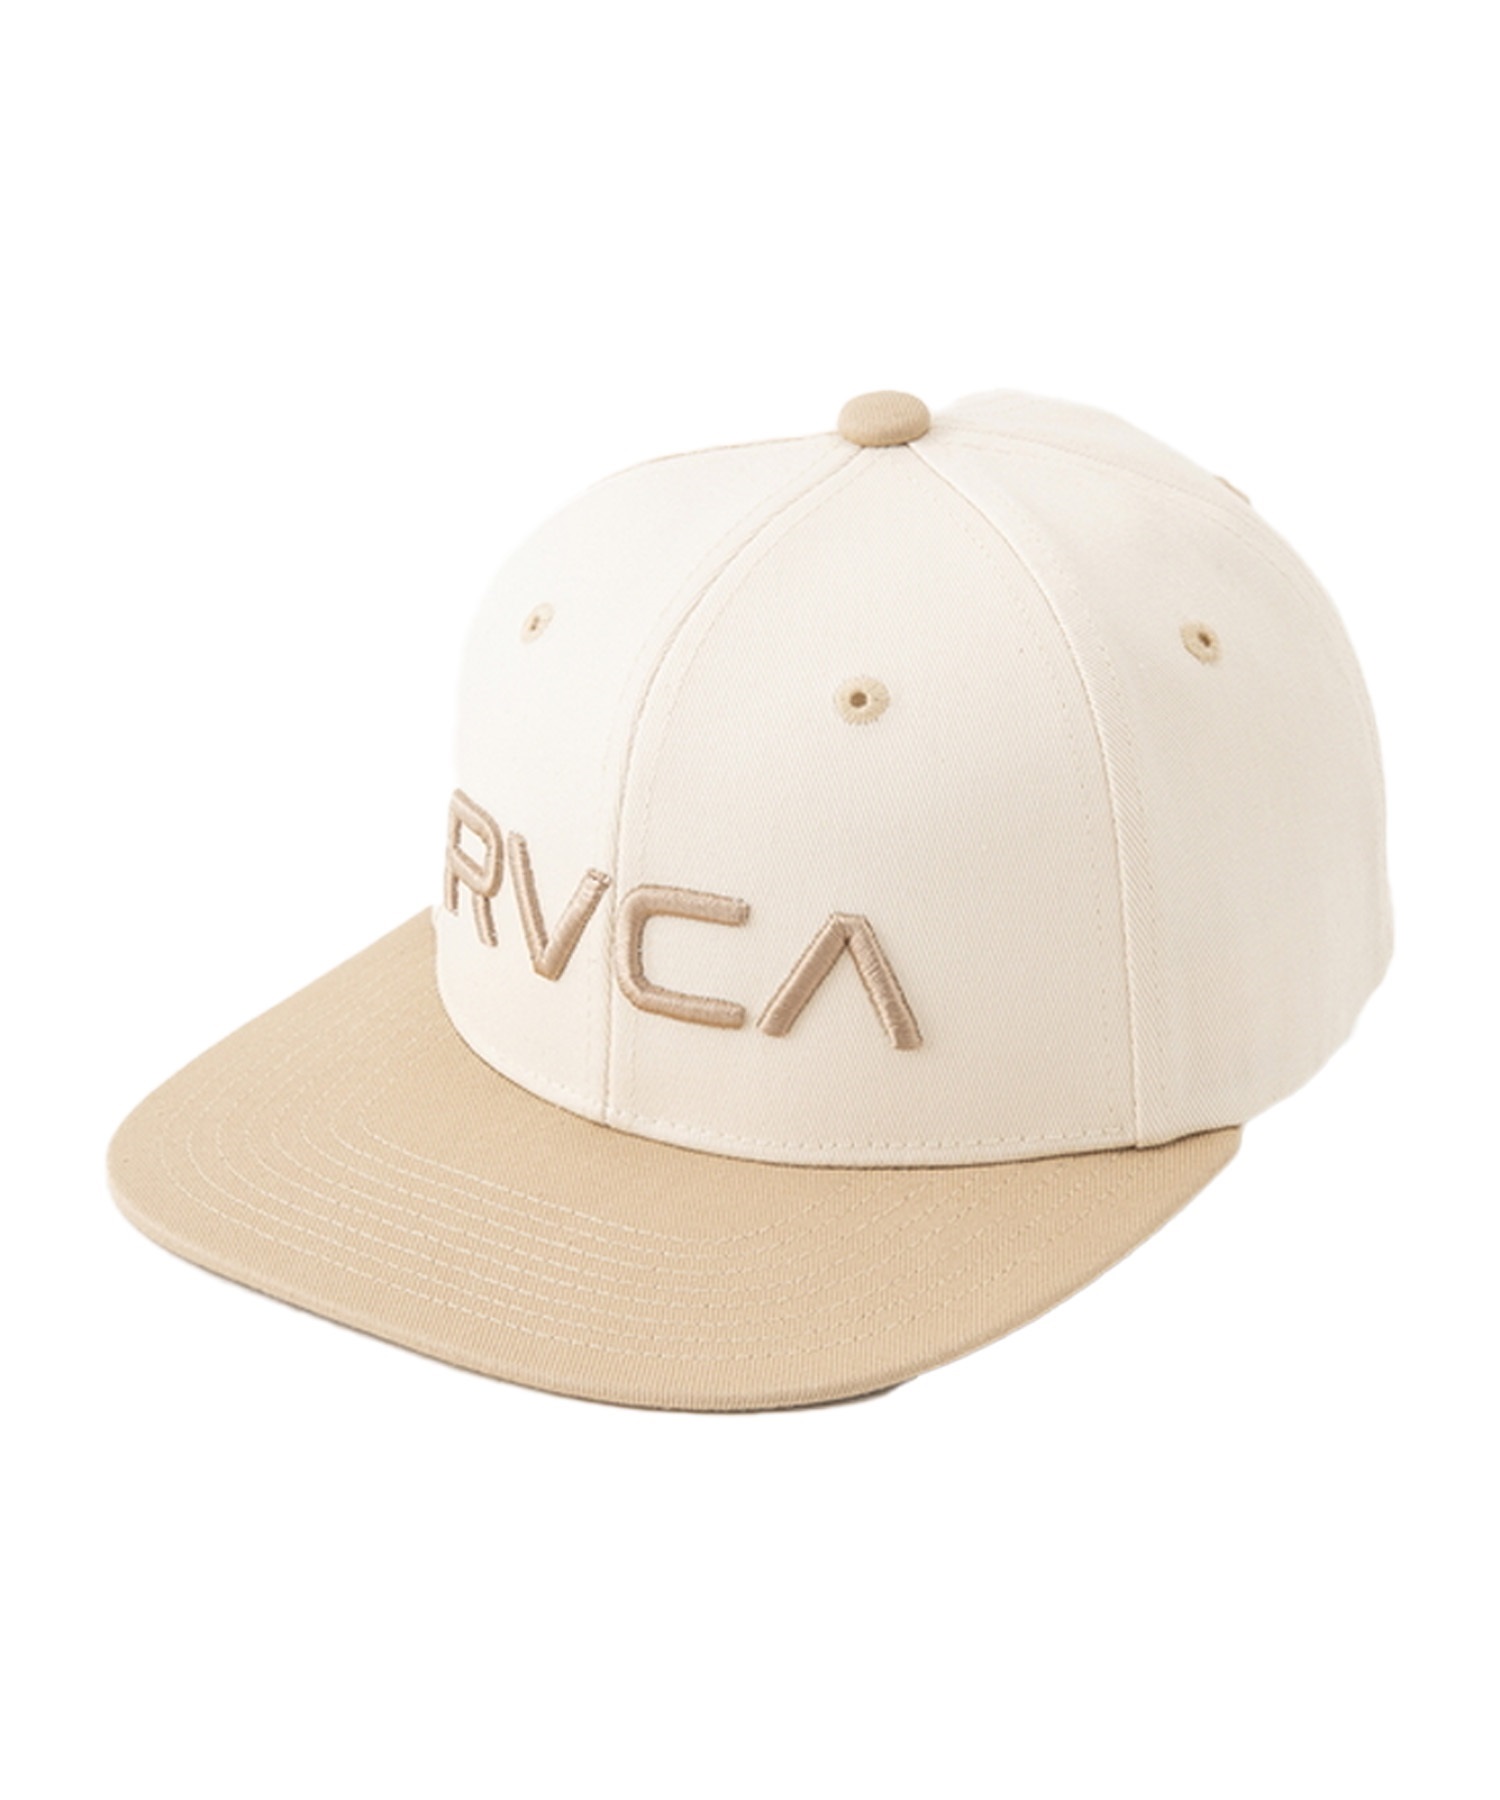 RVCA/ルーカ WILL SNAPBACKII キャップ 帽子 フリーサイズ BE041-911(BLK-FREE)